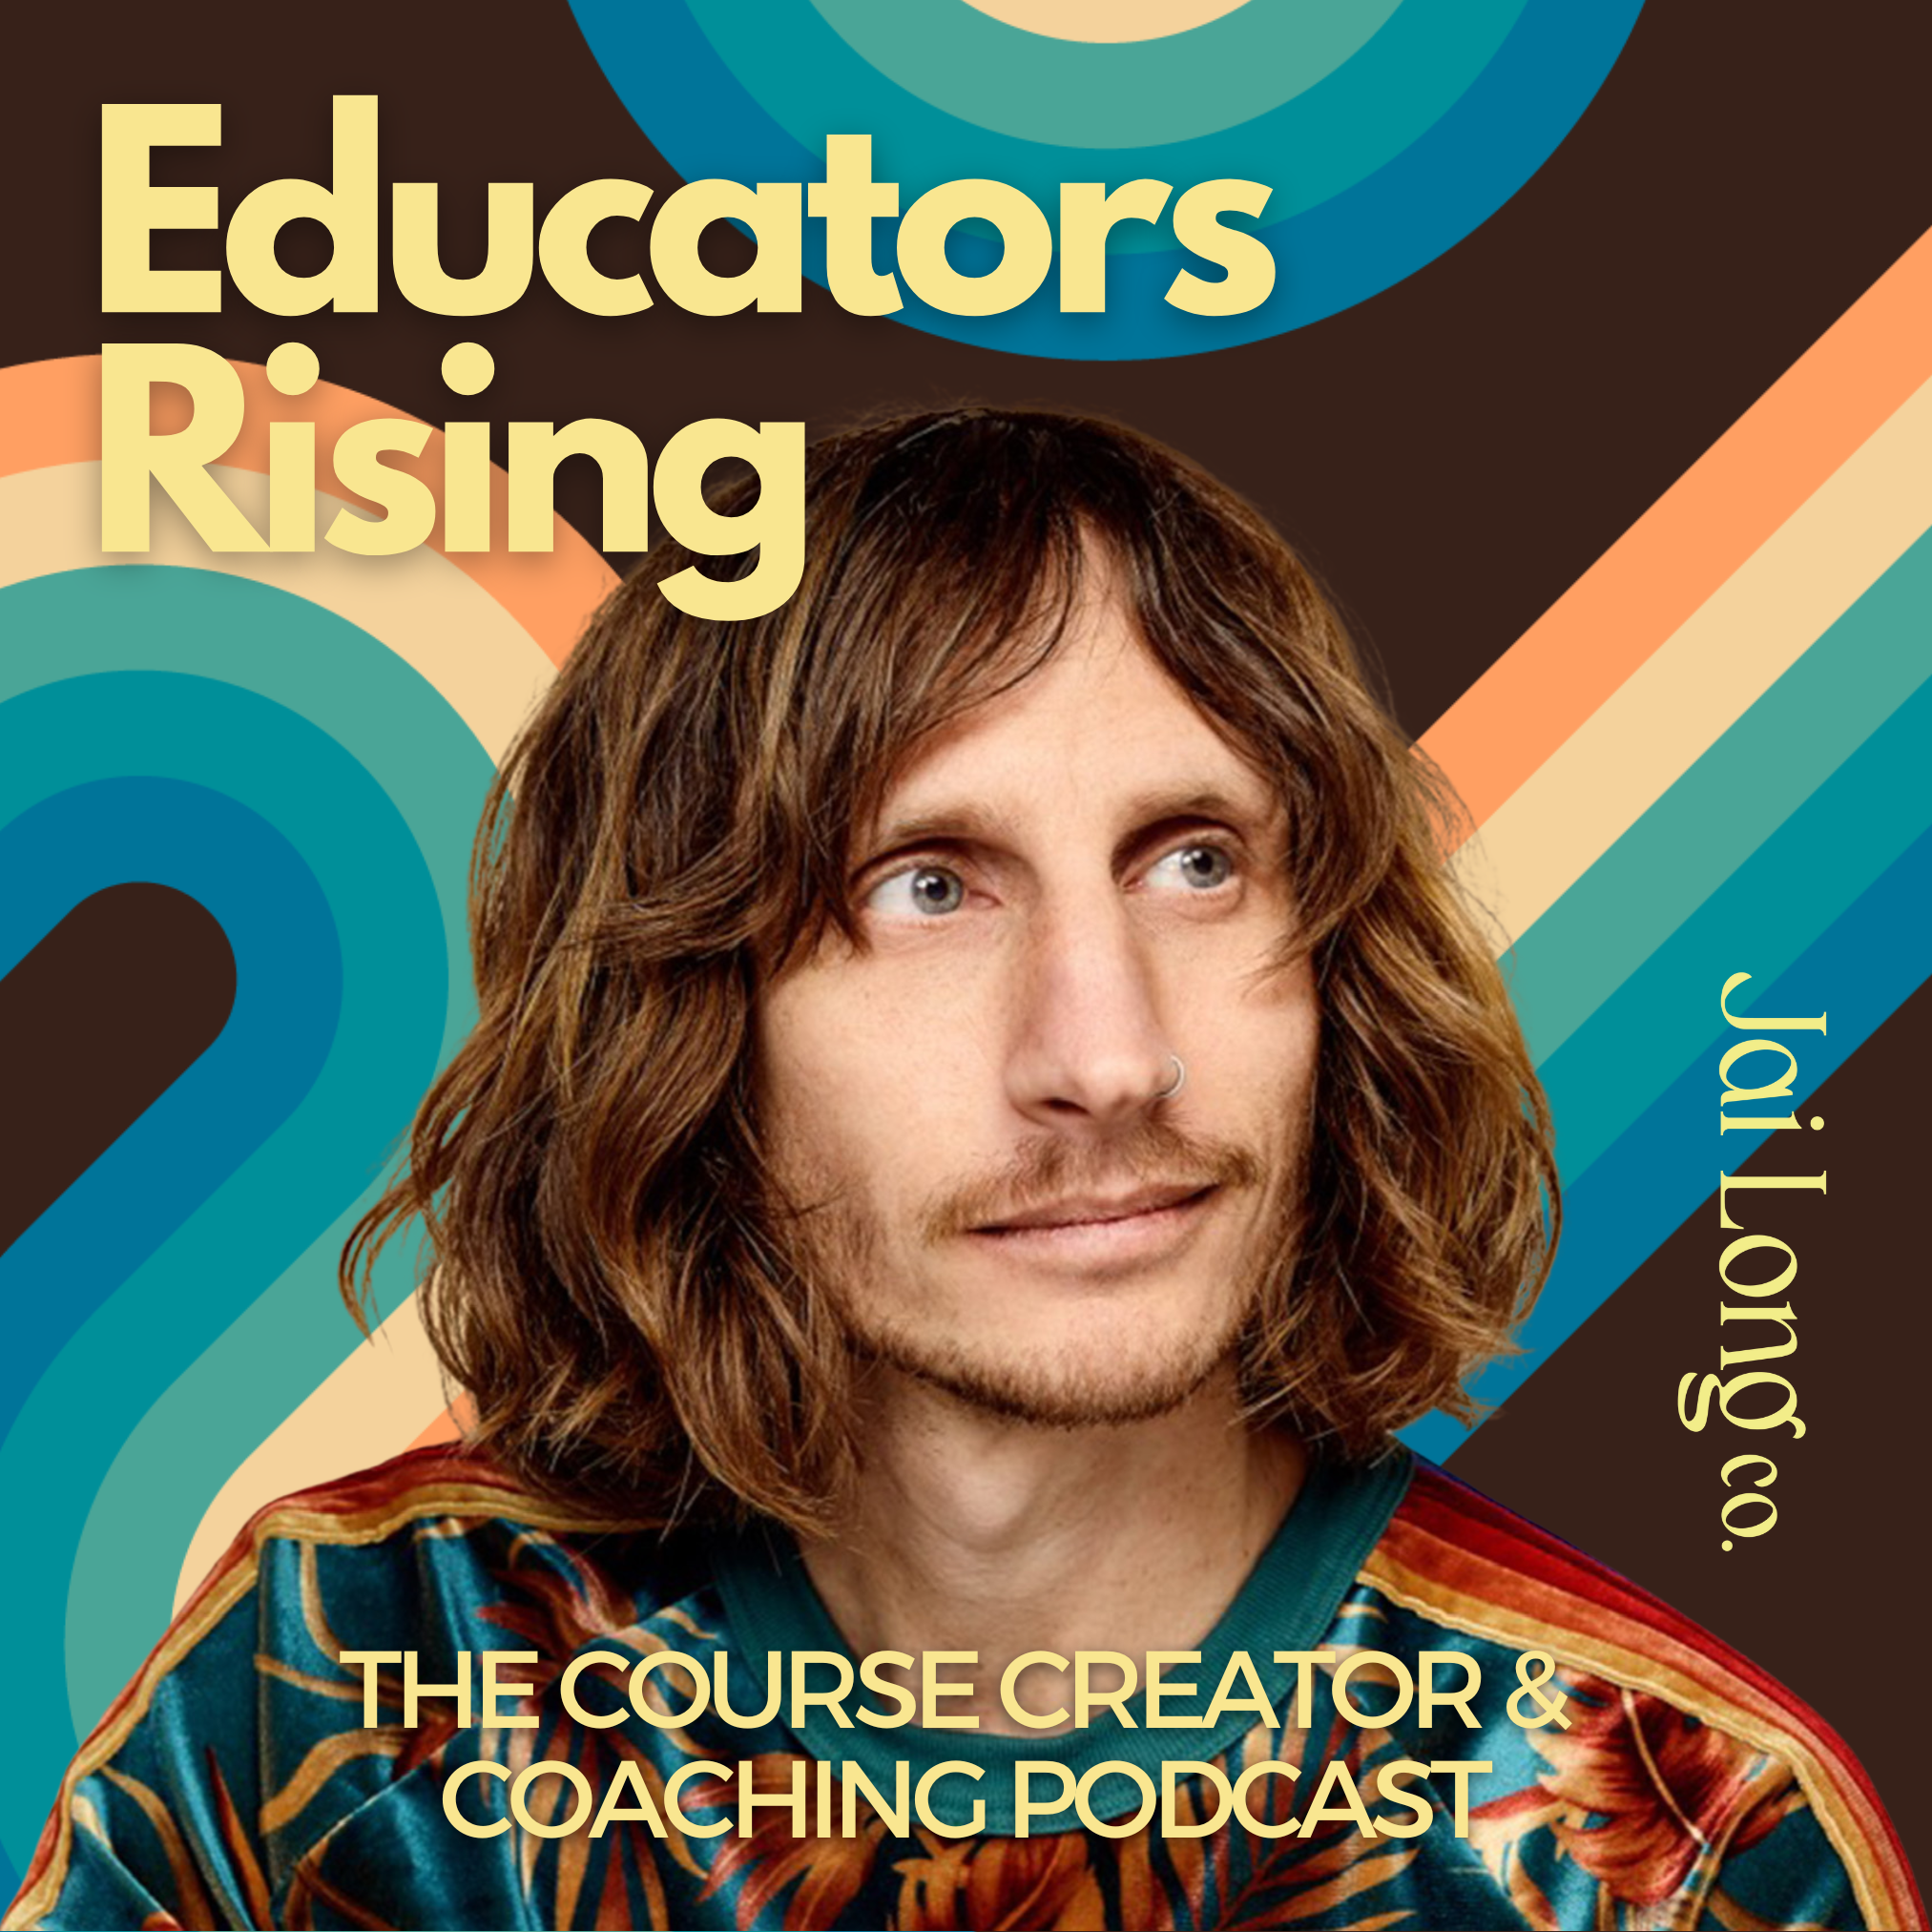 Educators rising podcast with Jai Long